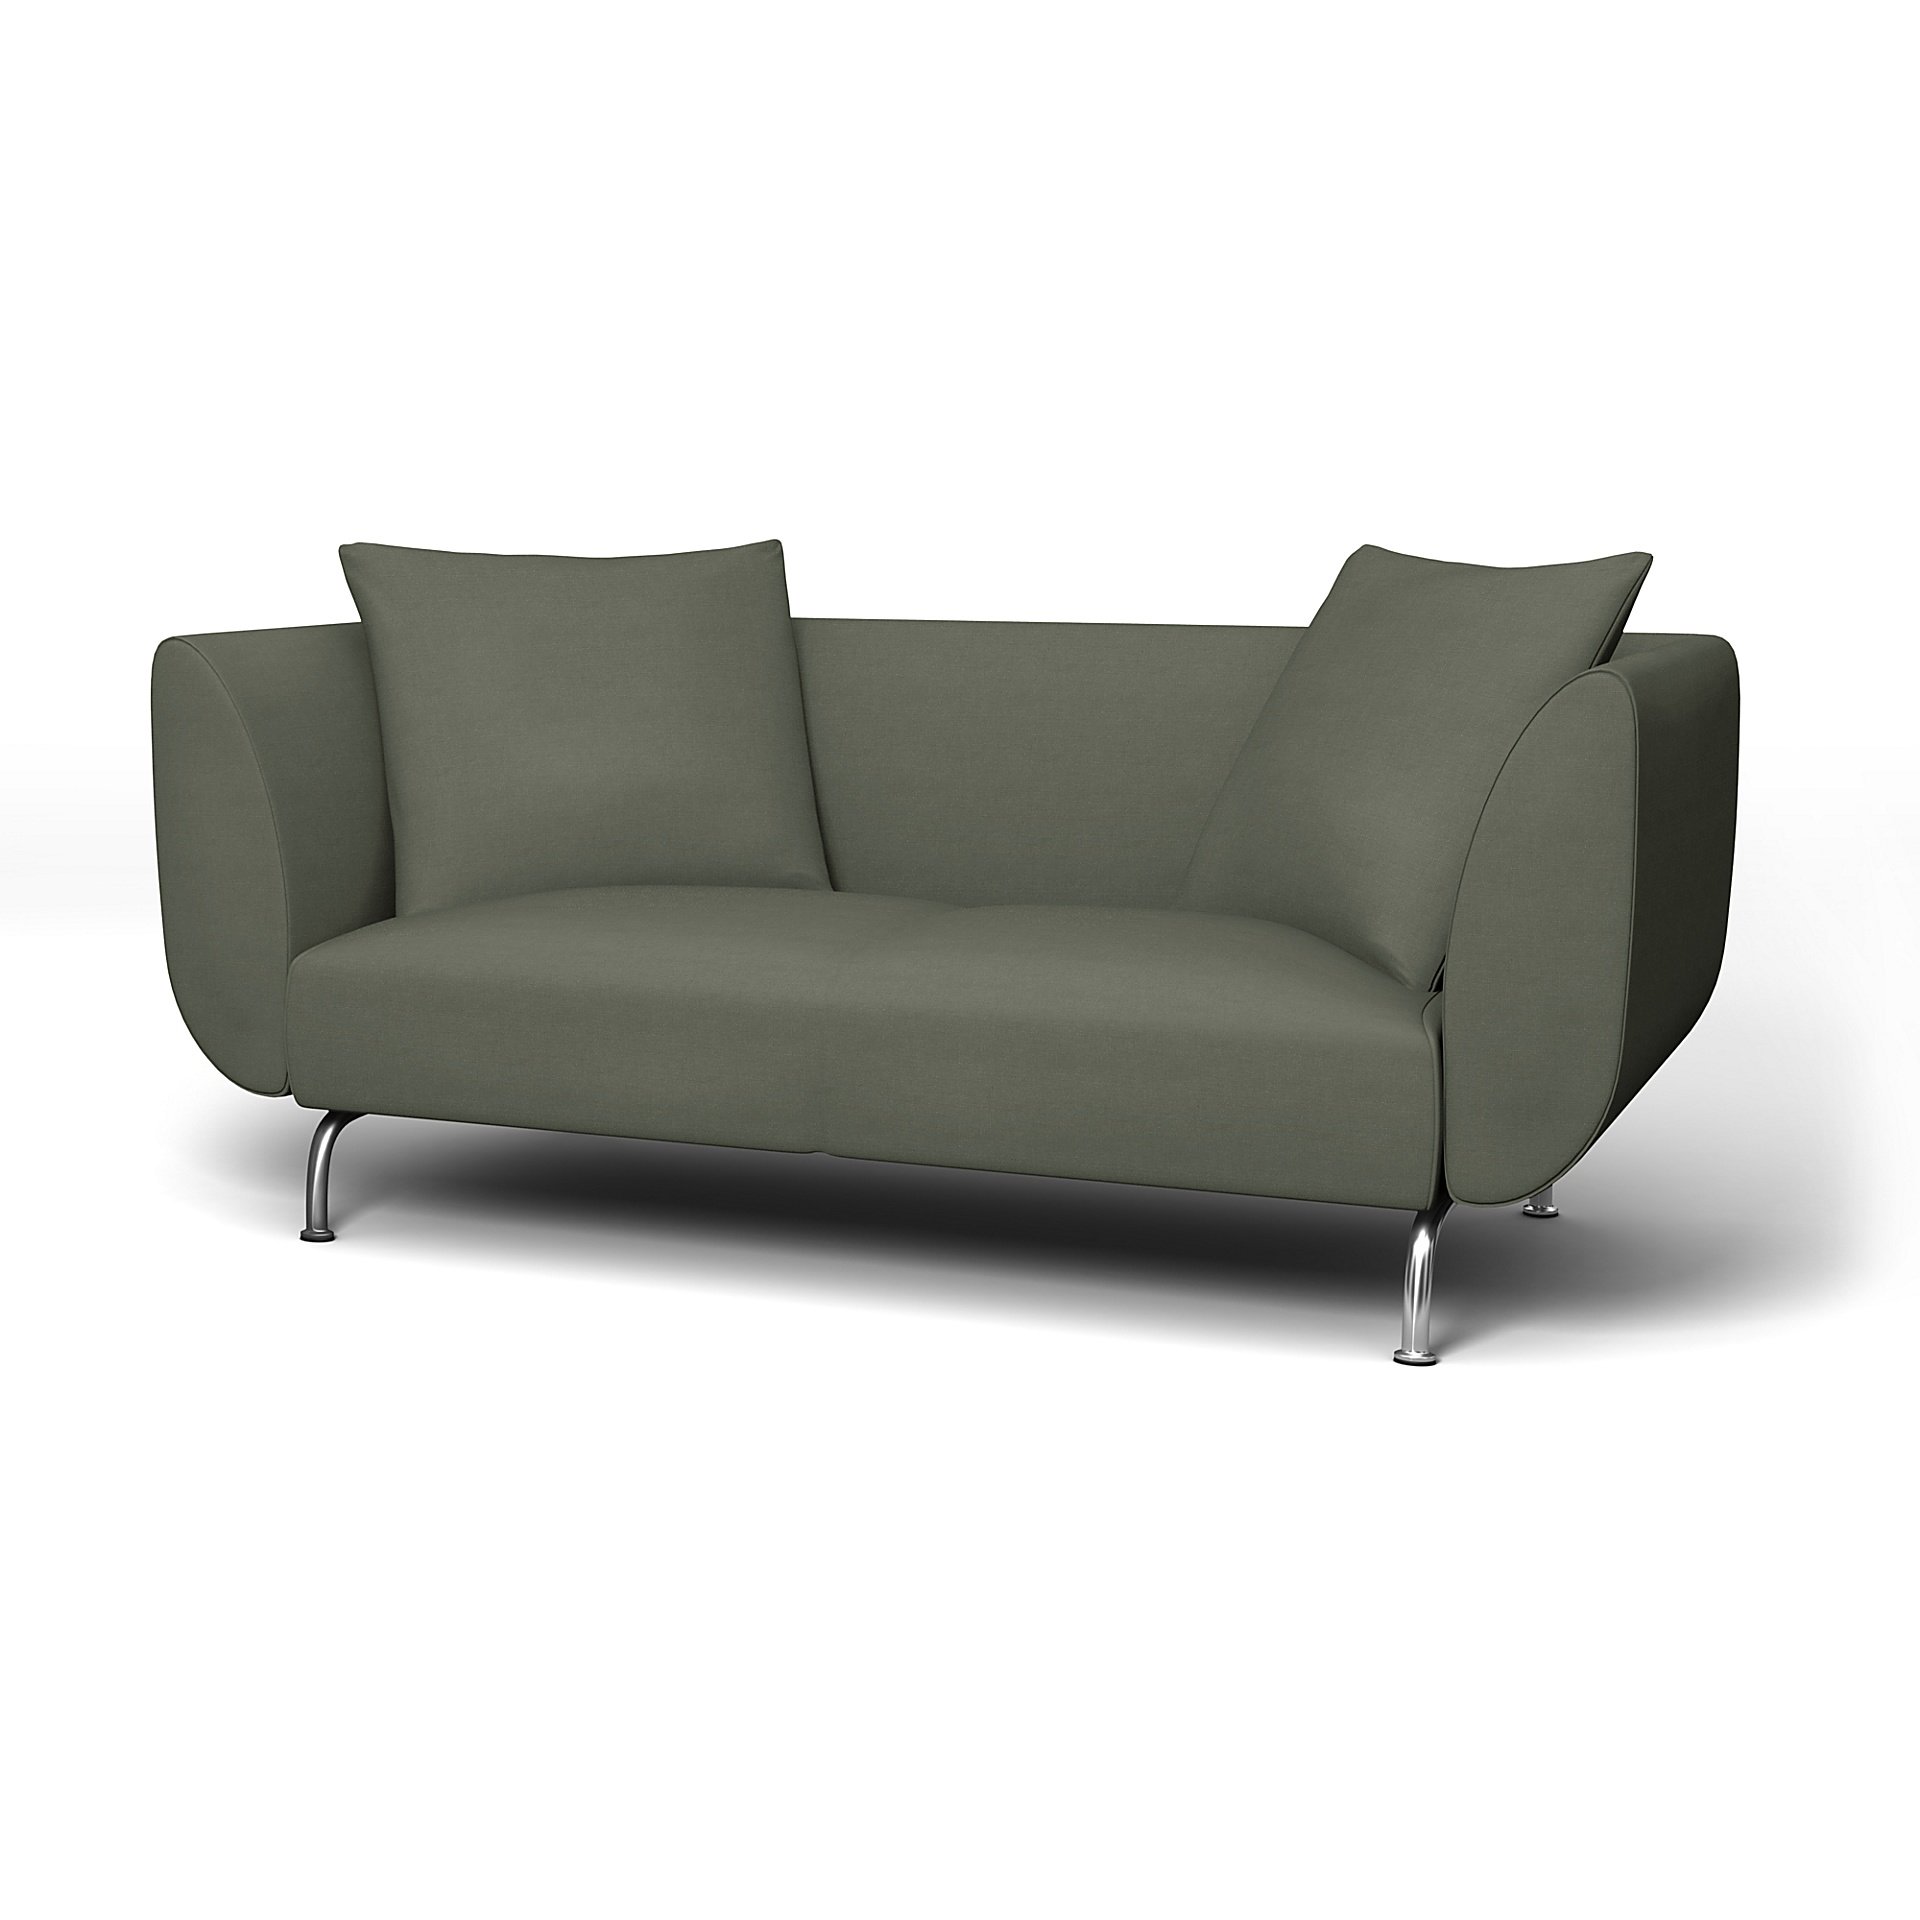 IKEA - Stromstad 2 Seater Sofa Cover, Rosemary, Linen - Bemz